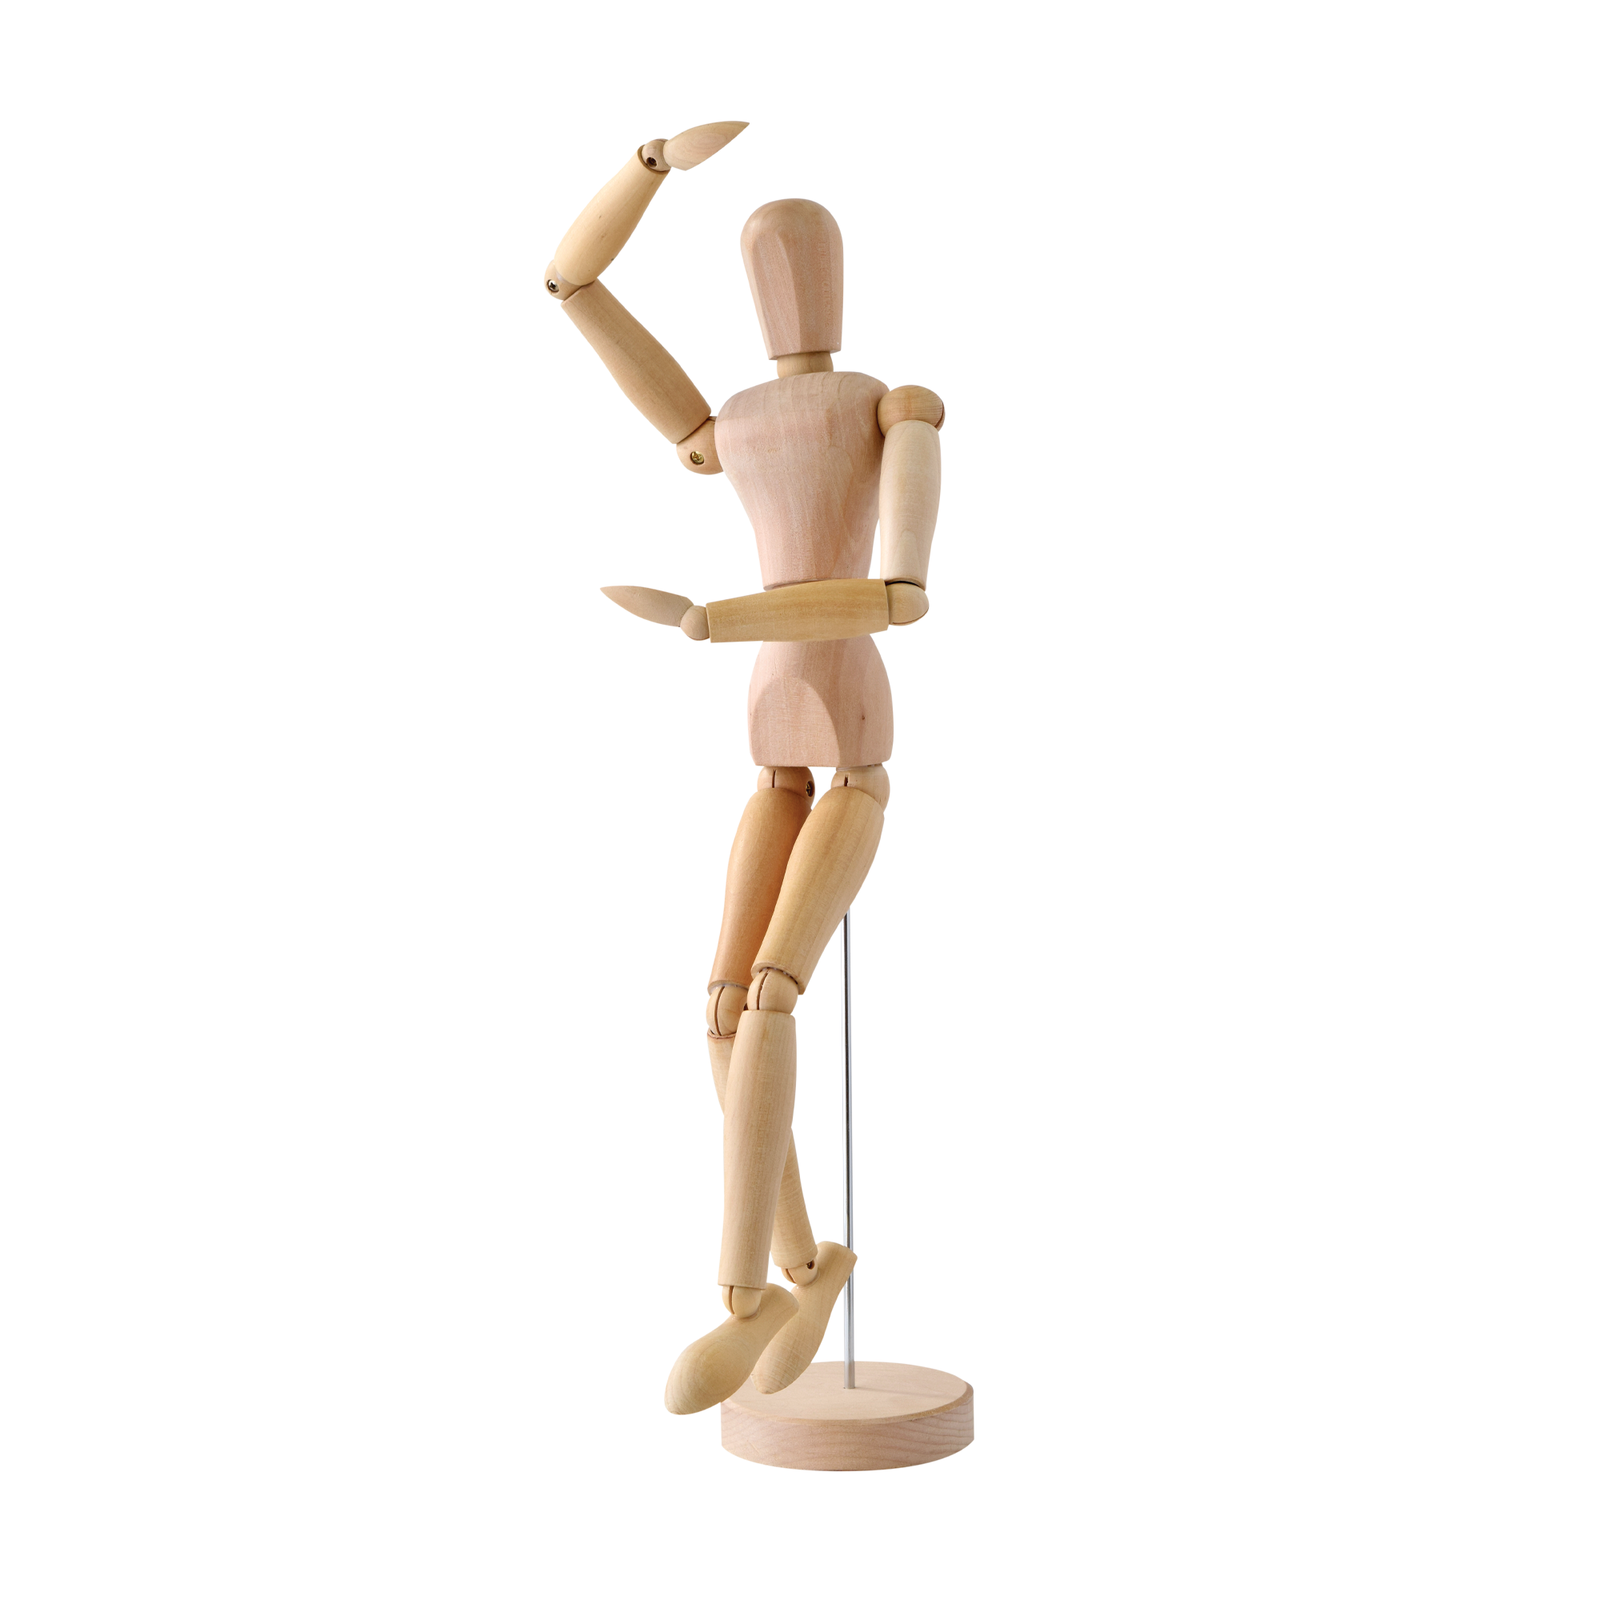 ATL - Maniquí de madera articulado femenino 40.5 cm